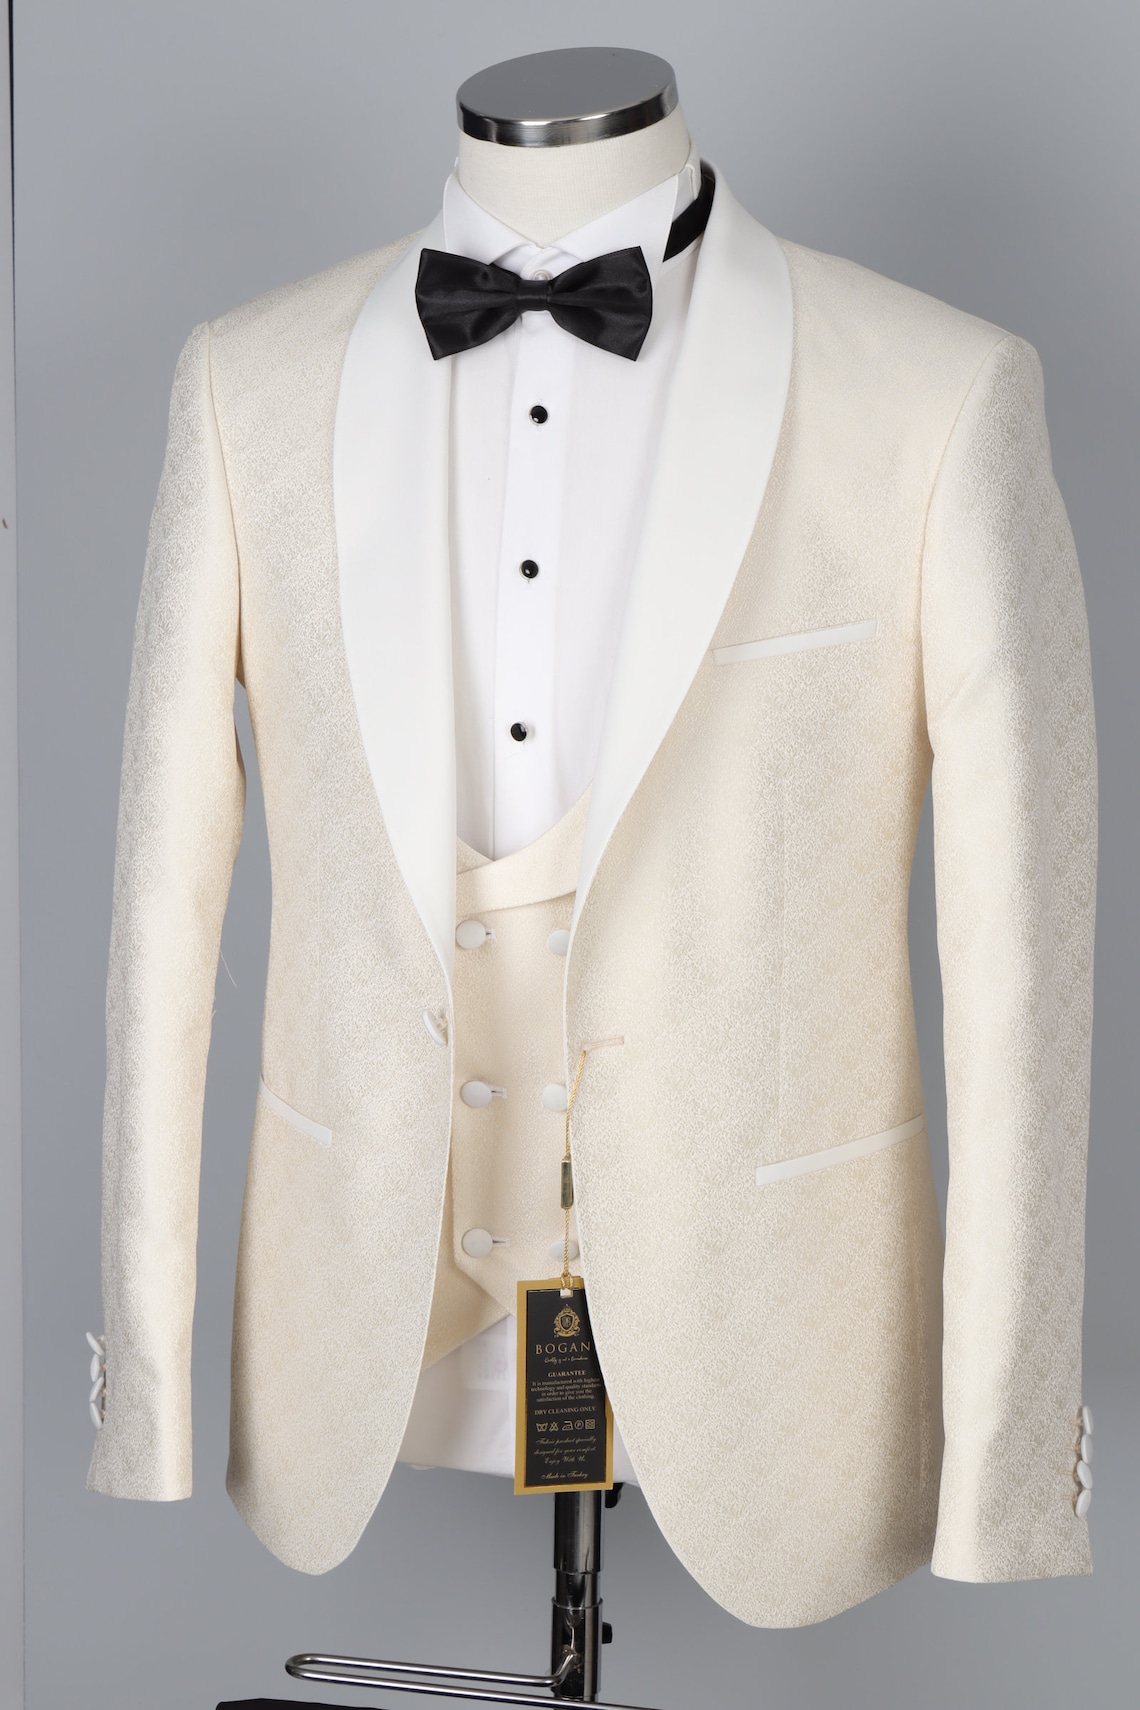 3 Piece Off White Men Tuxedo Wedding Suit | Etsy